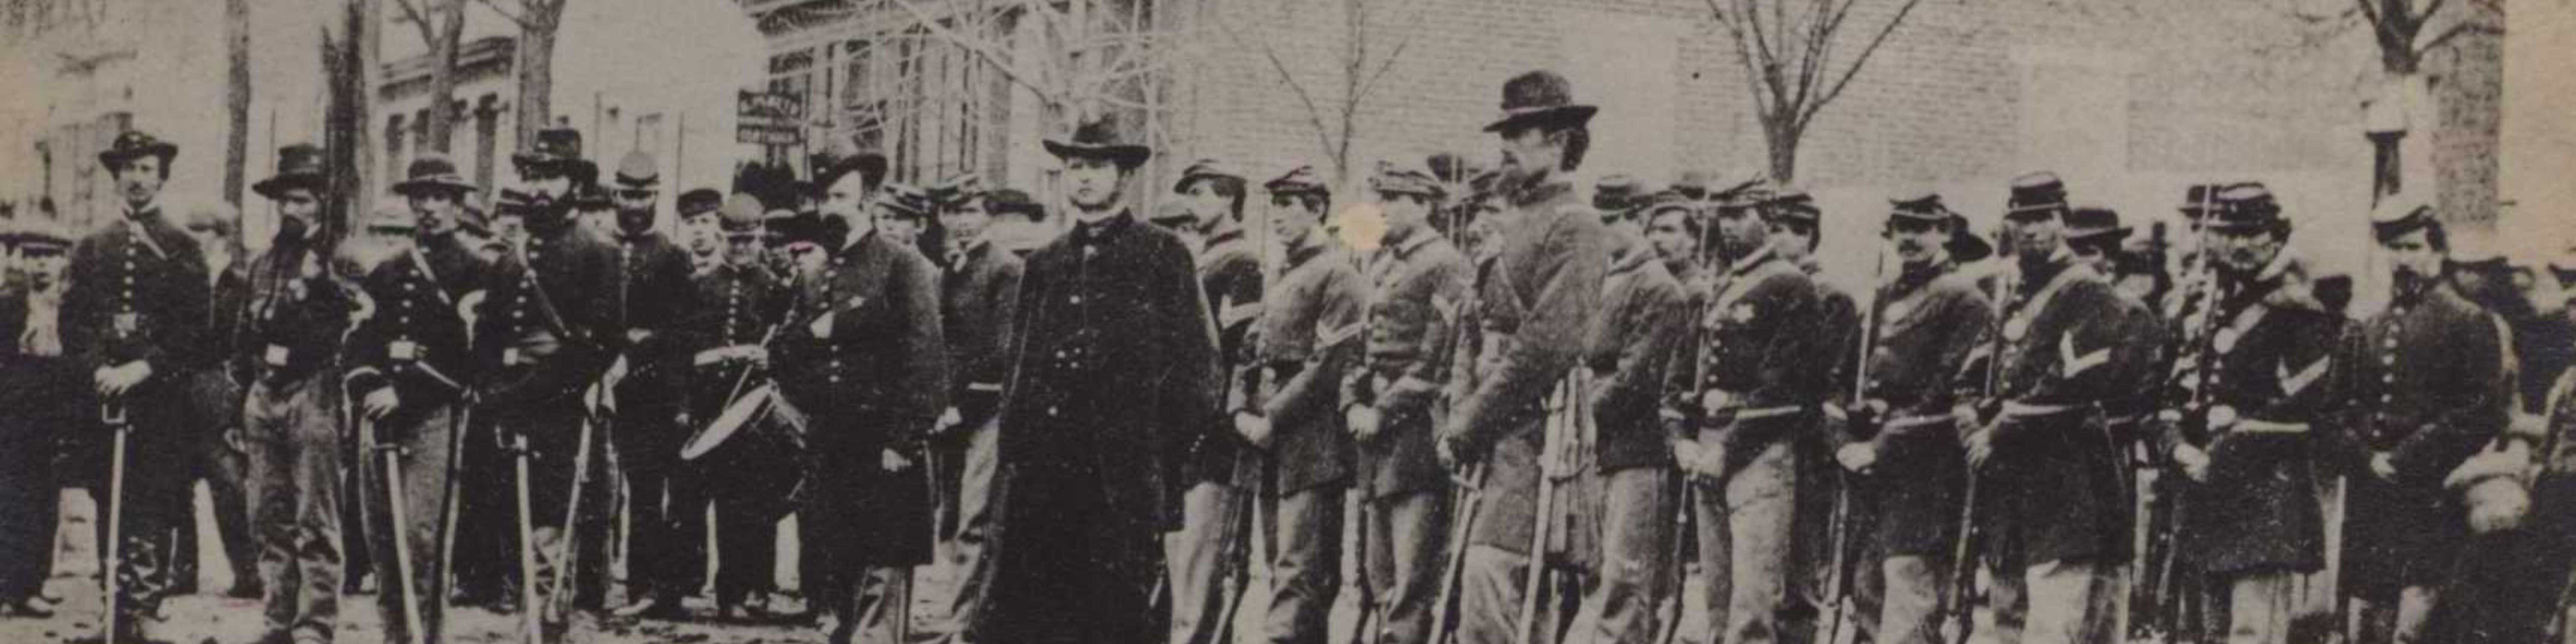 Image of Civil War Soldiers gathered on Broad Street, Bethlehem